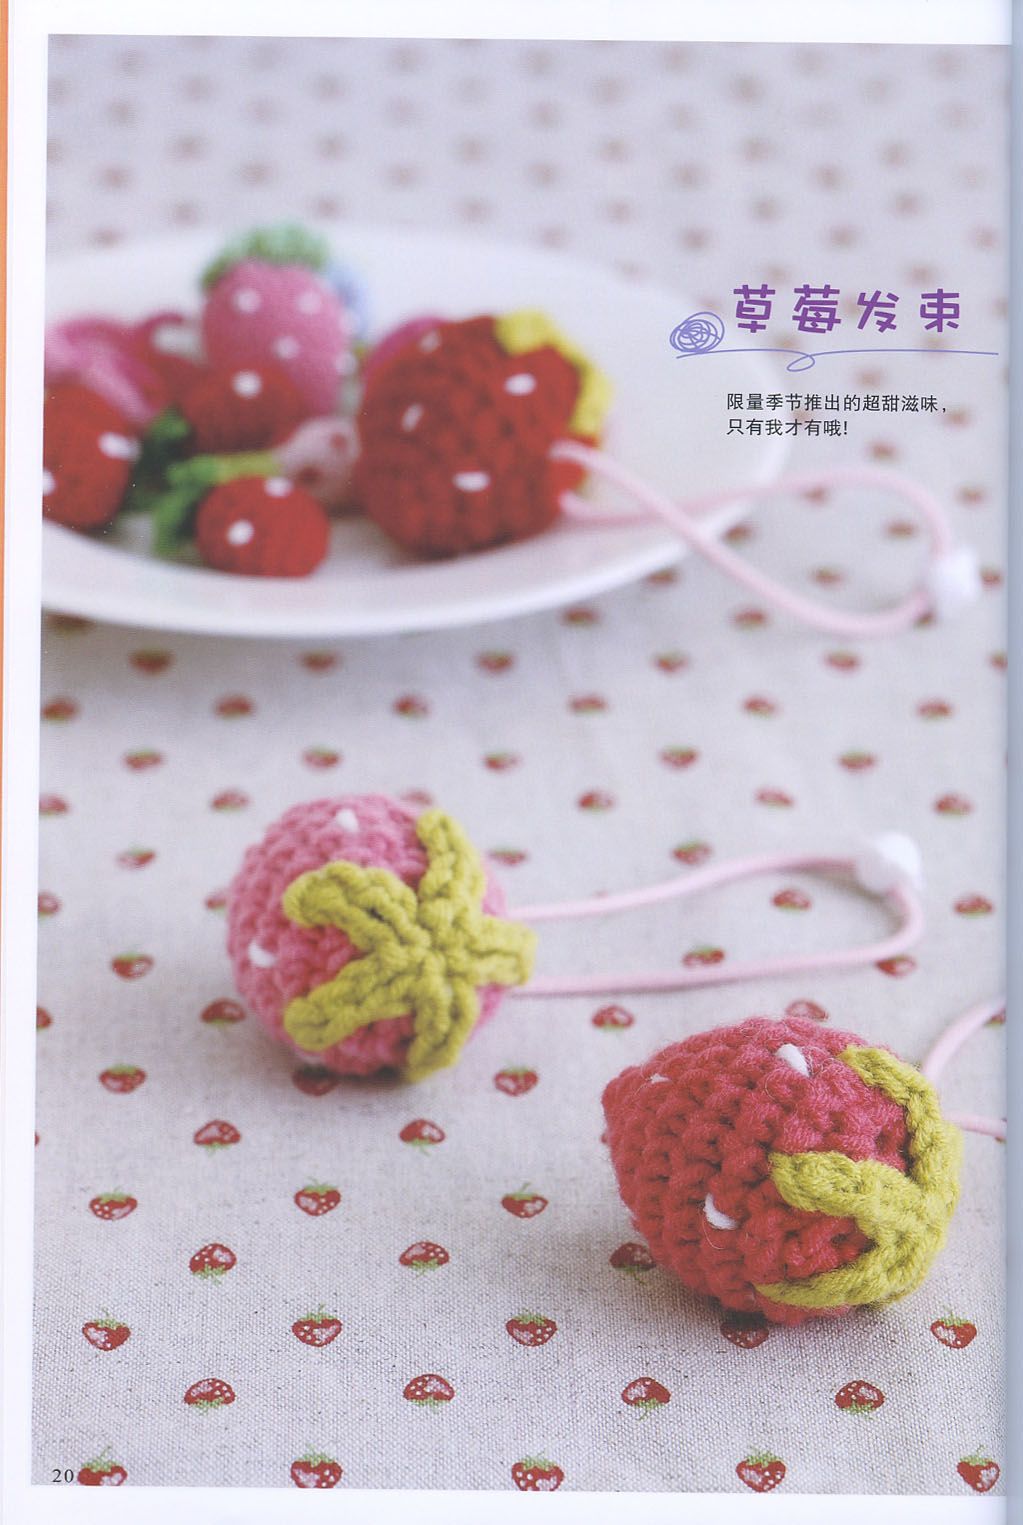 Strawberry hair clips amigurumi pattern (1)